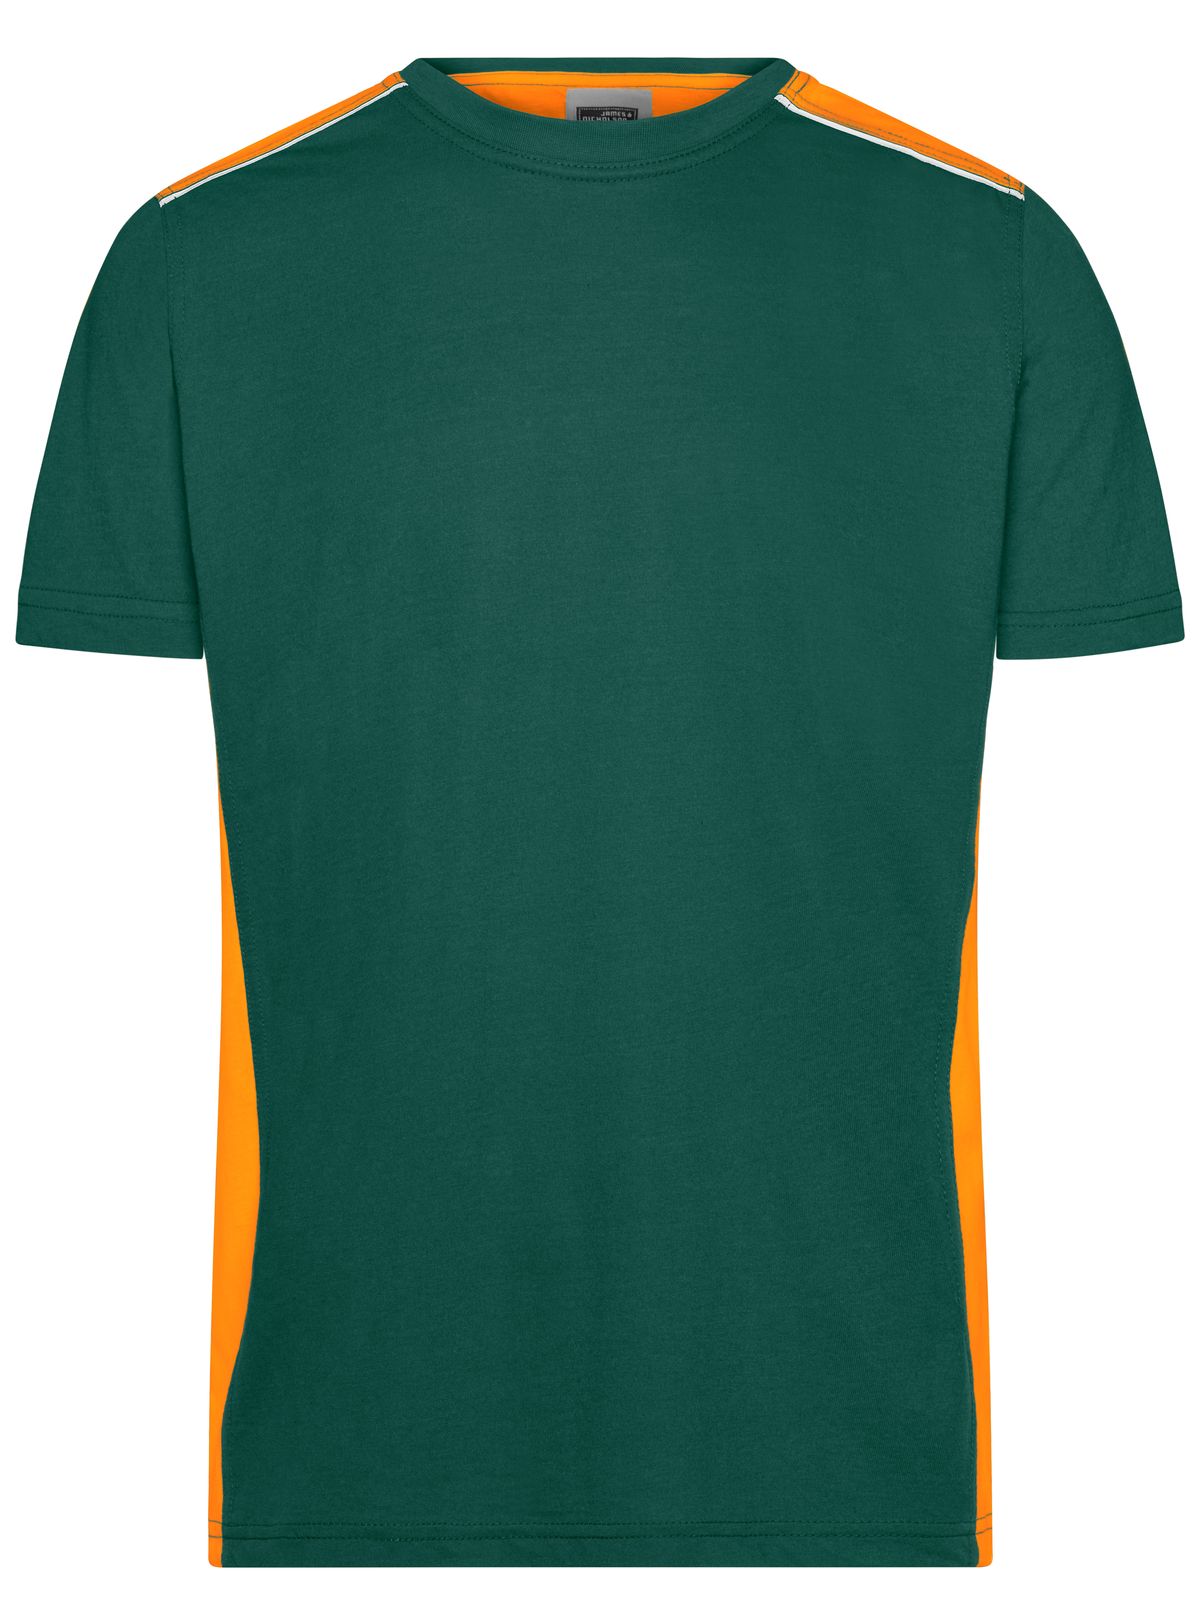 mens-workwear-t-shirt-color-dark-green-orange.webp